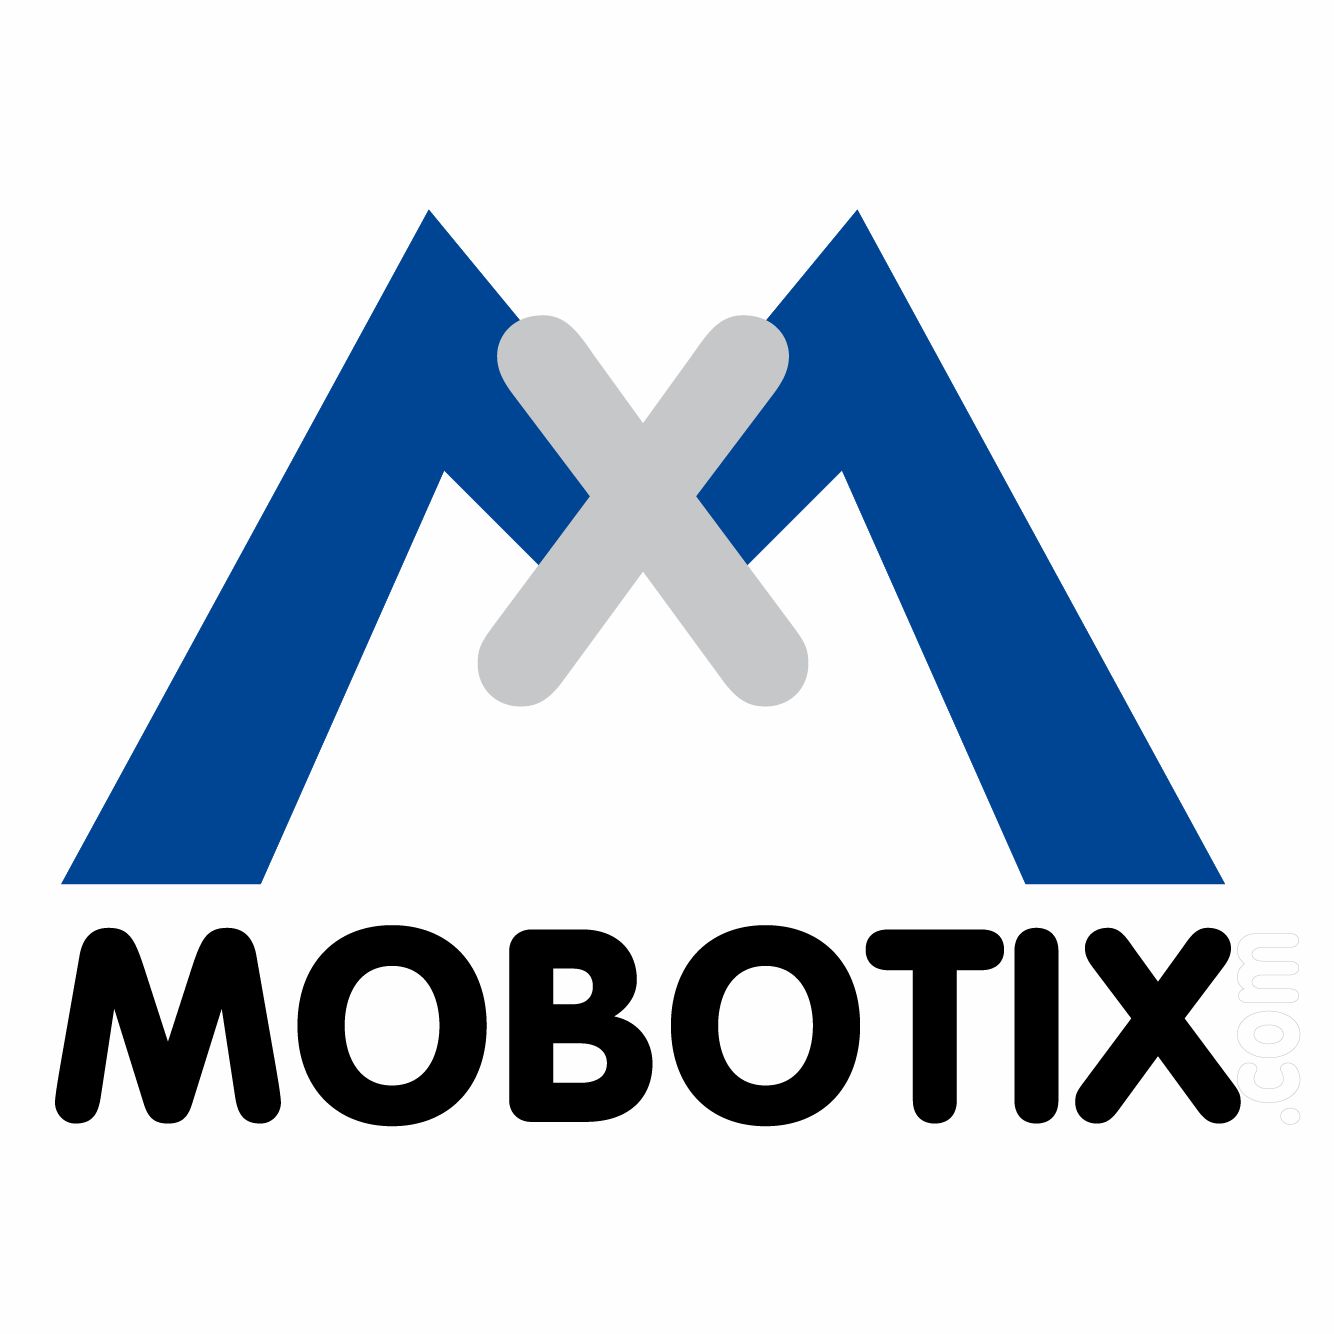 https://securetech.local/wp-content/uploads/2019/02/22.MOBOTIX.png